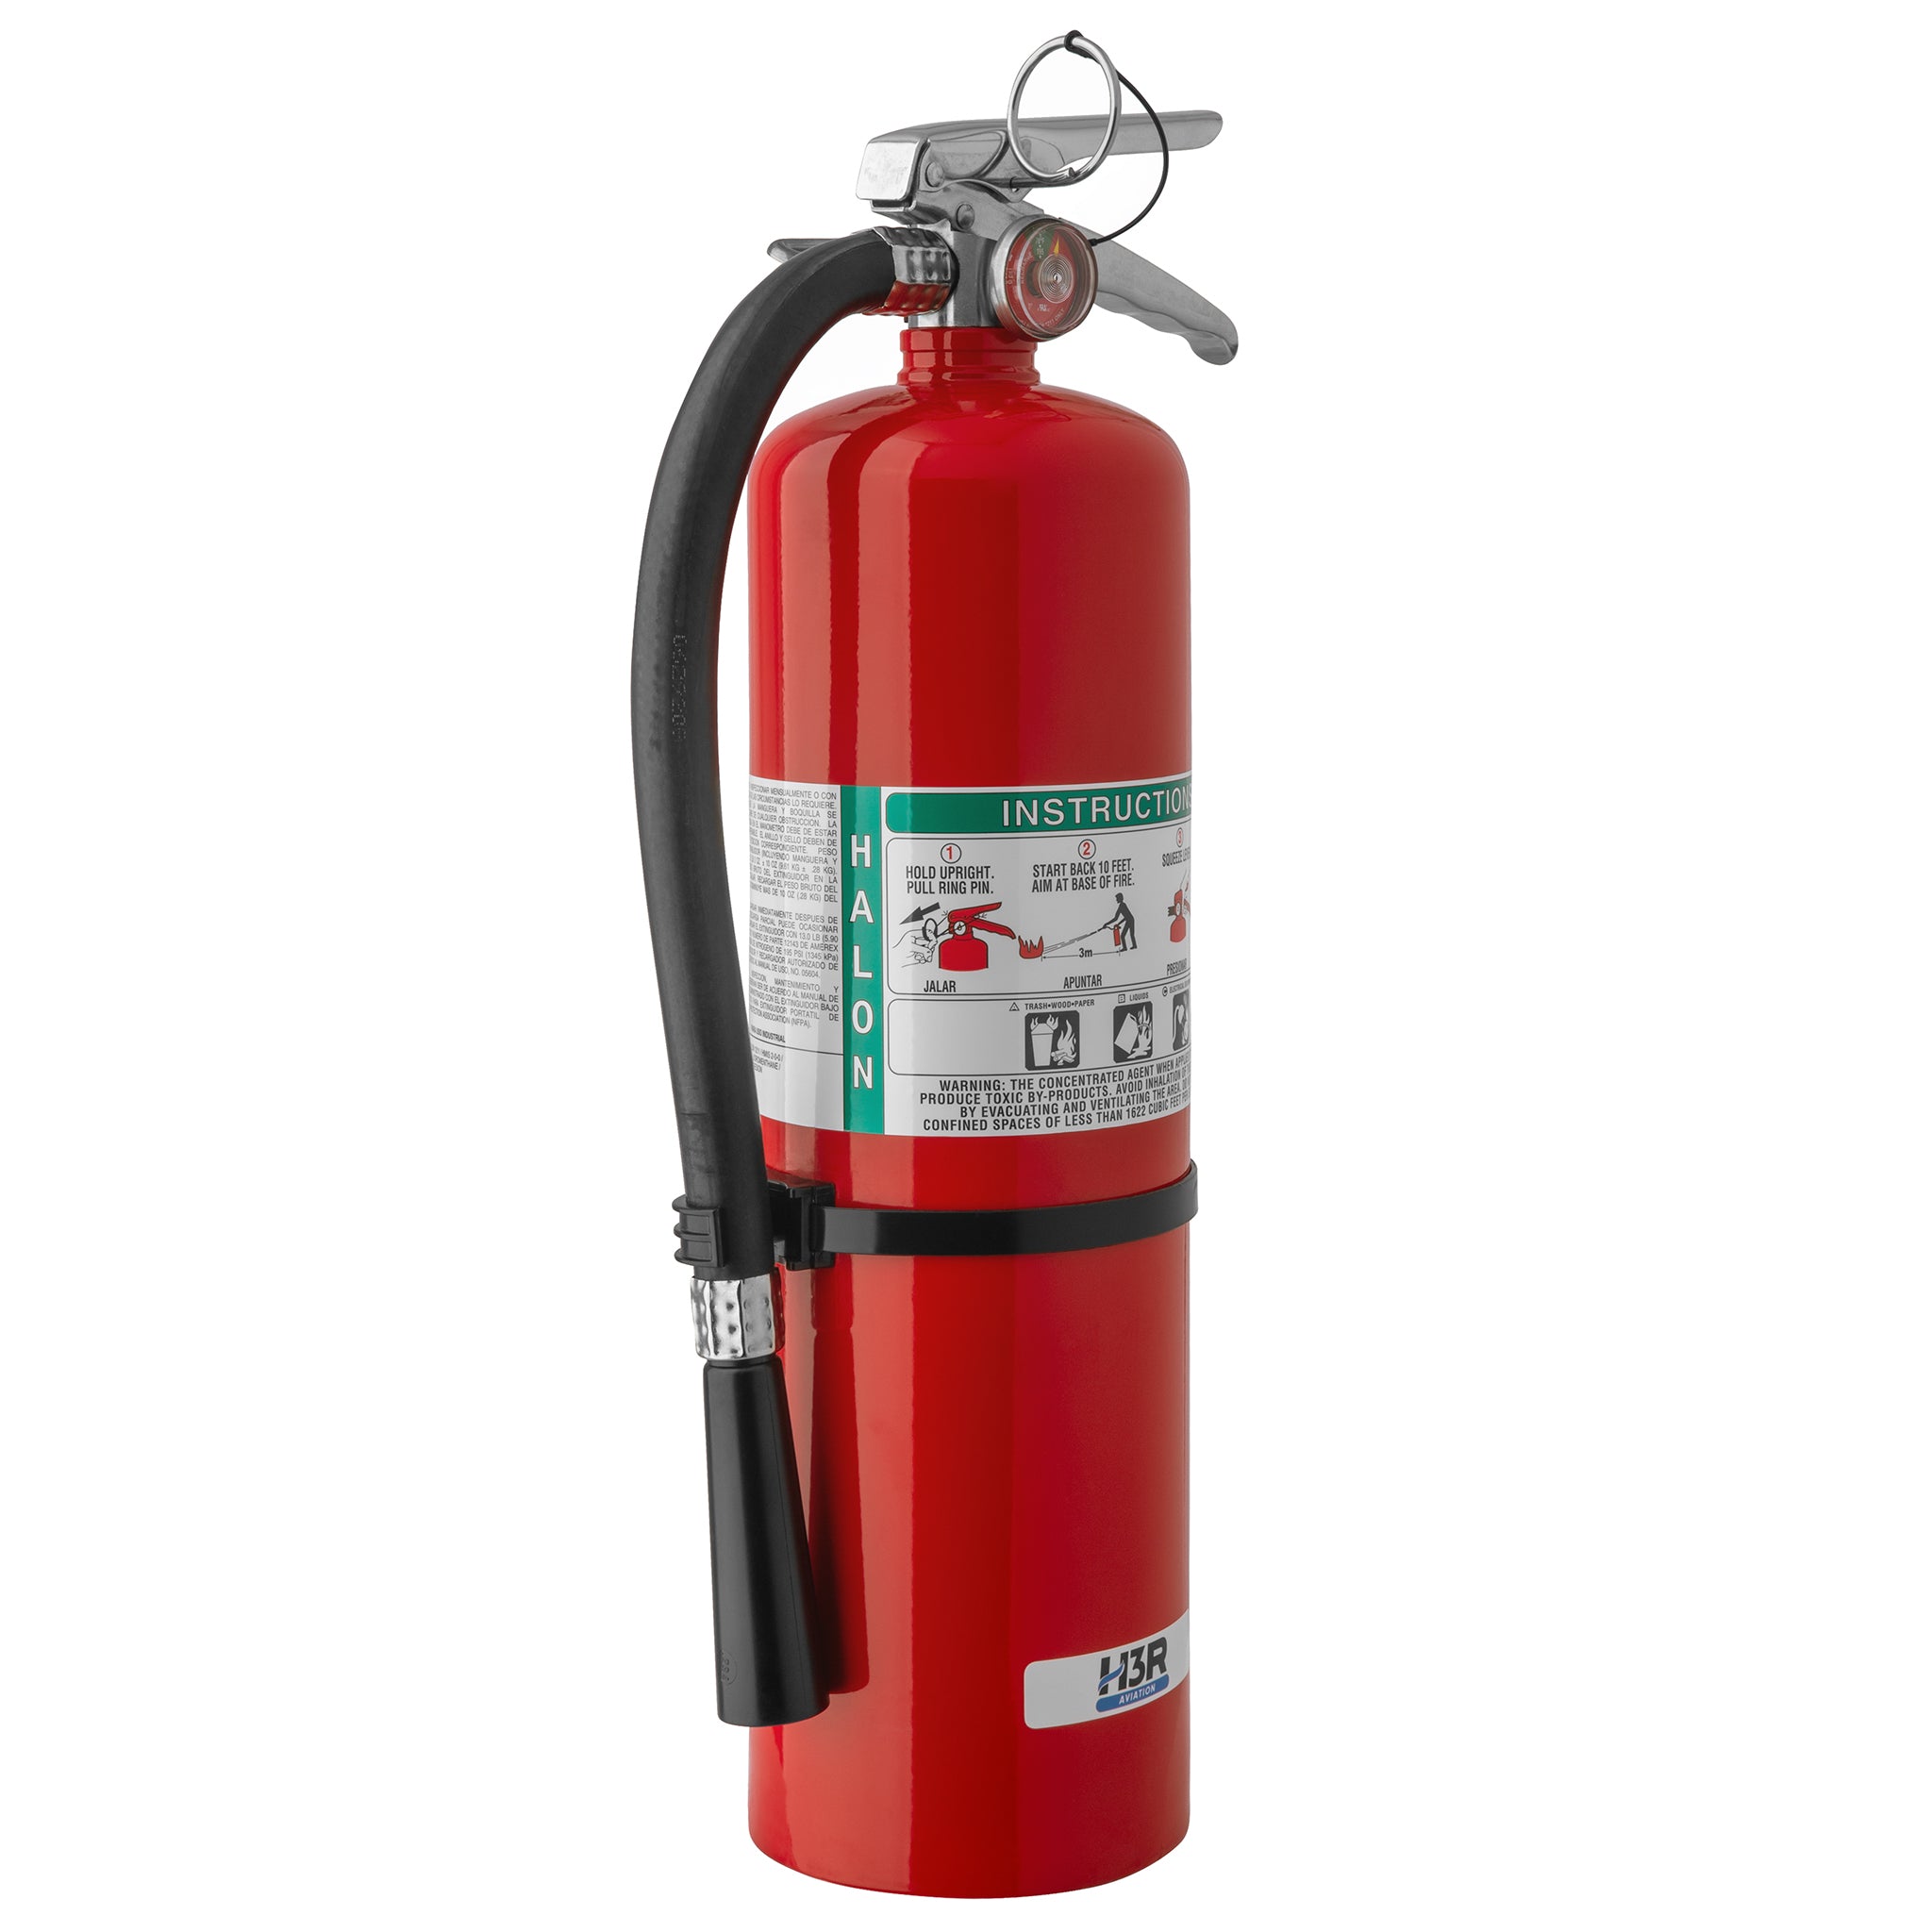 B371 - 13.0 lb. Halon Fire Extinguisher